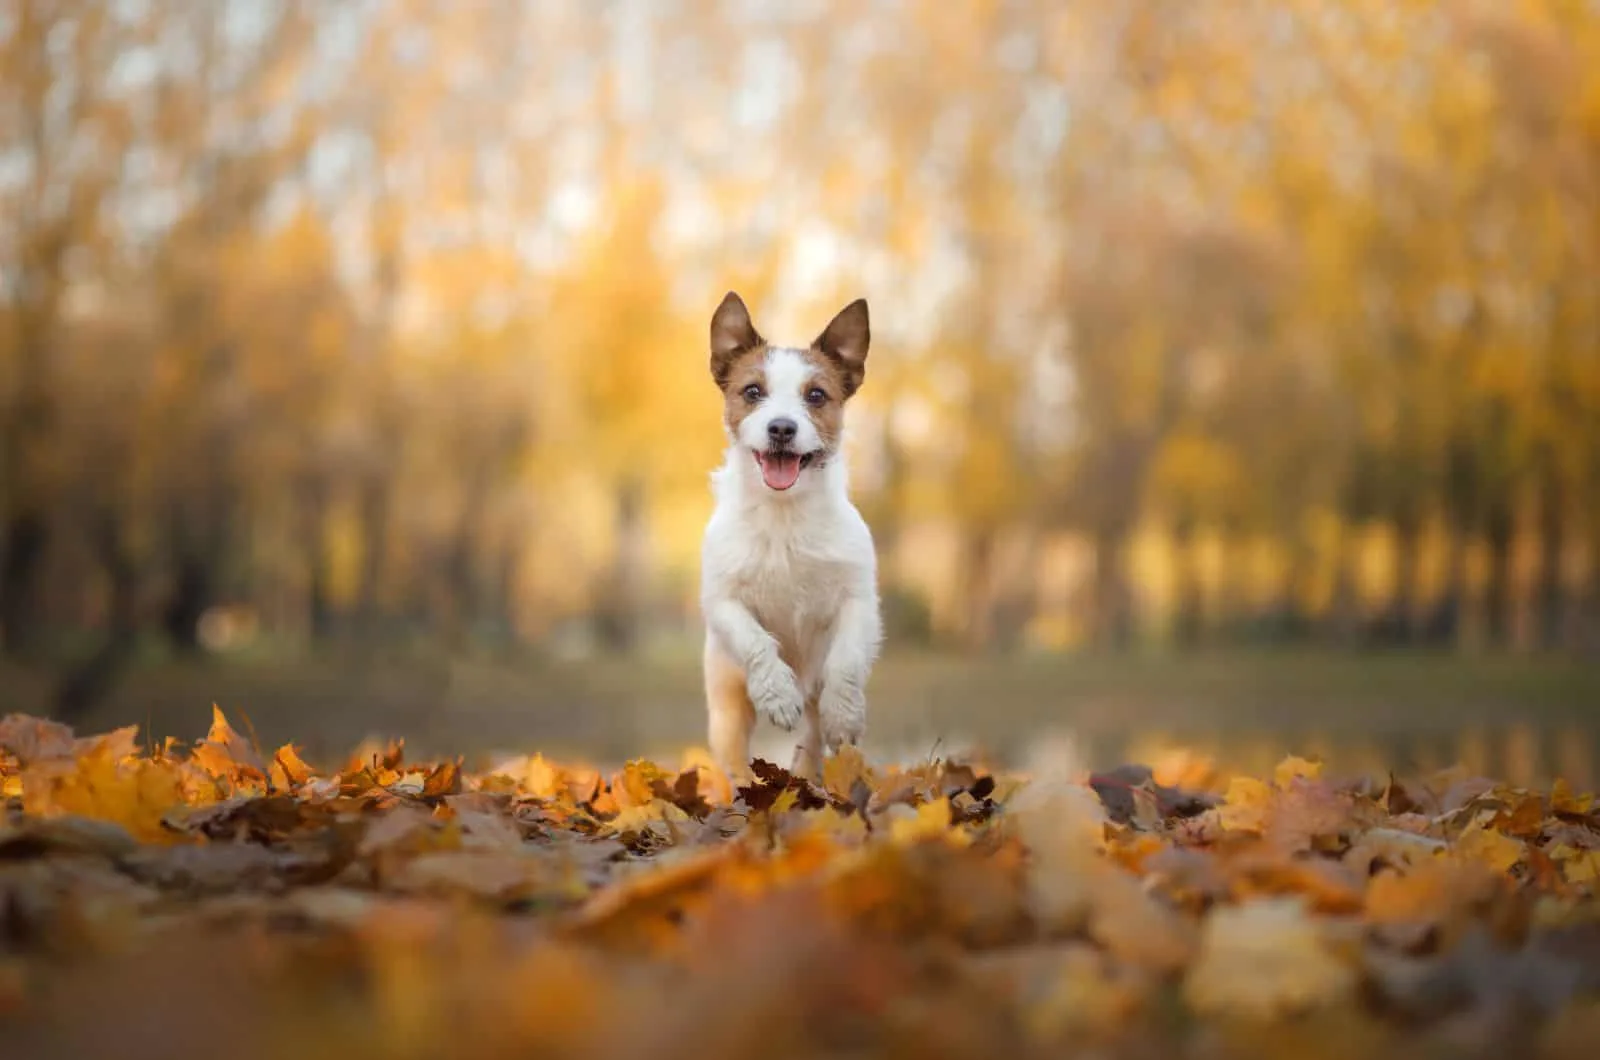 Jack Russell Terrier standing in woods